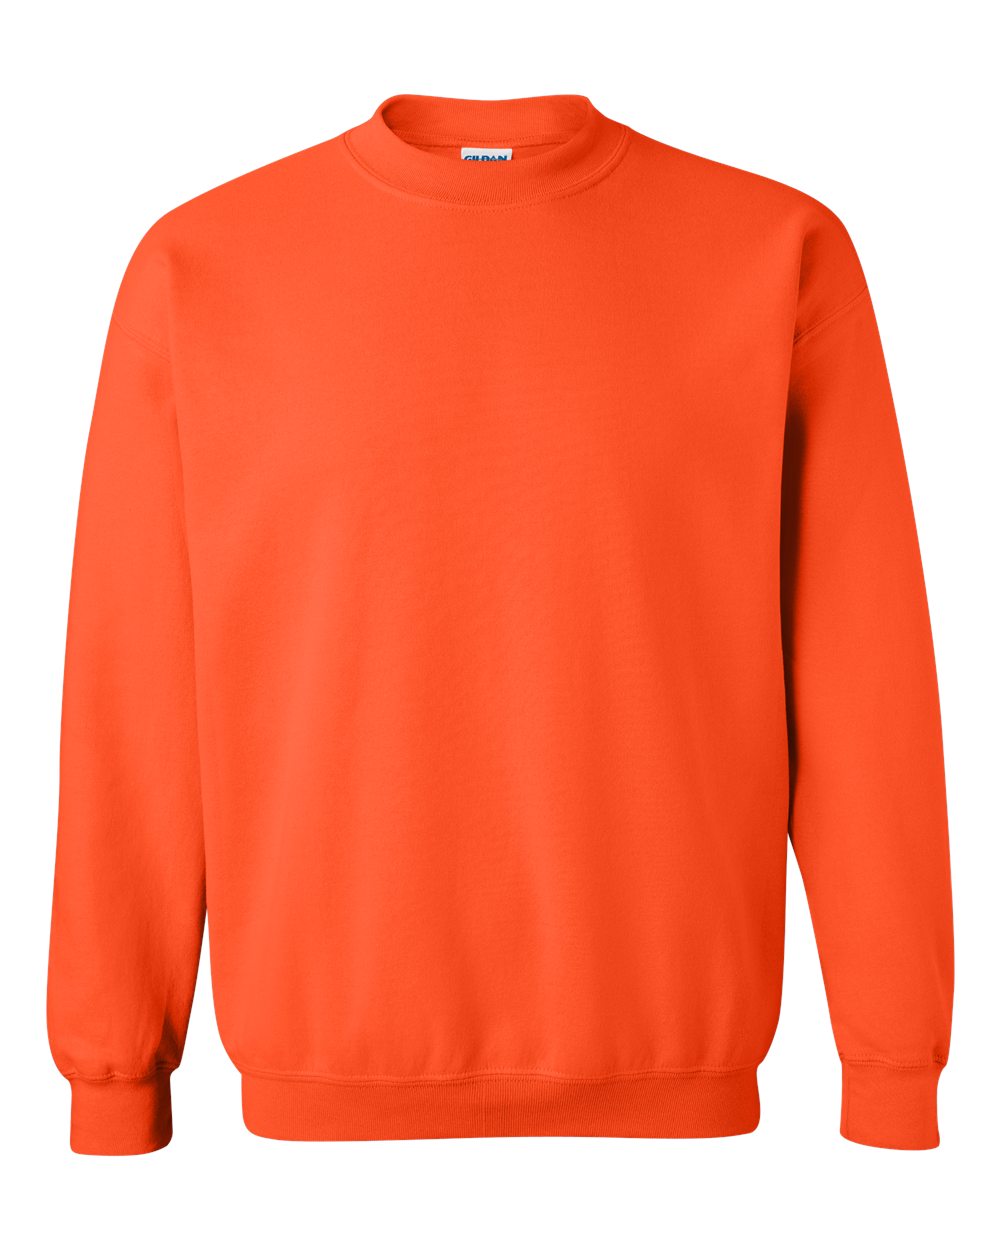 Orange Crew Neck Sweatshirt - T9543OR